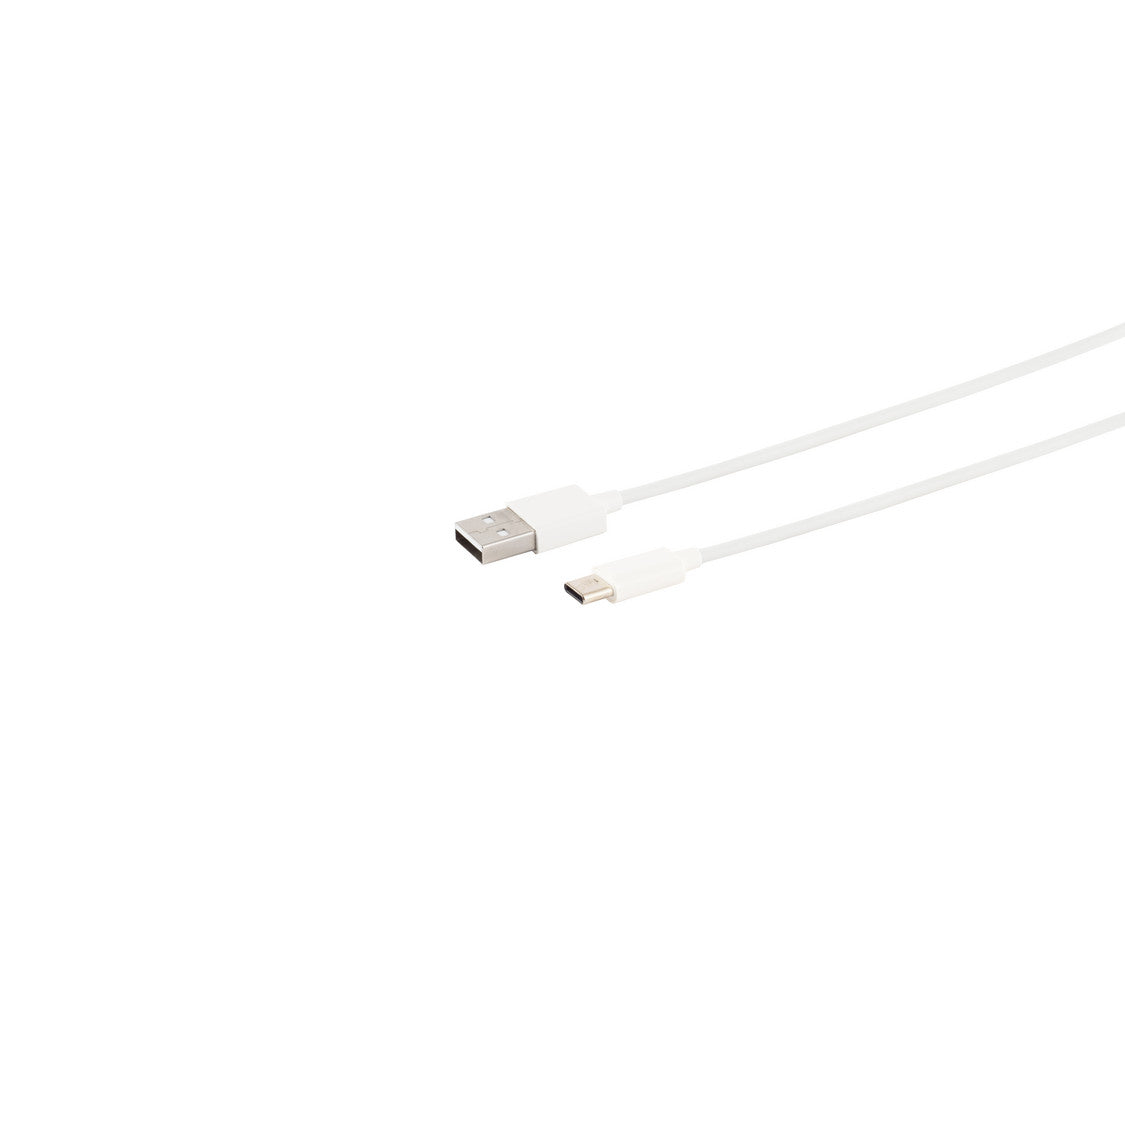 USB Lade-Sync Kabel, USB A Stecker auf USB-C Stecker, 2.0, ABS, weiß